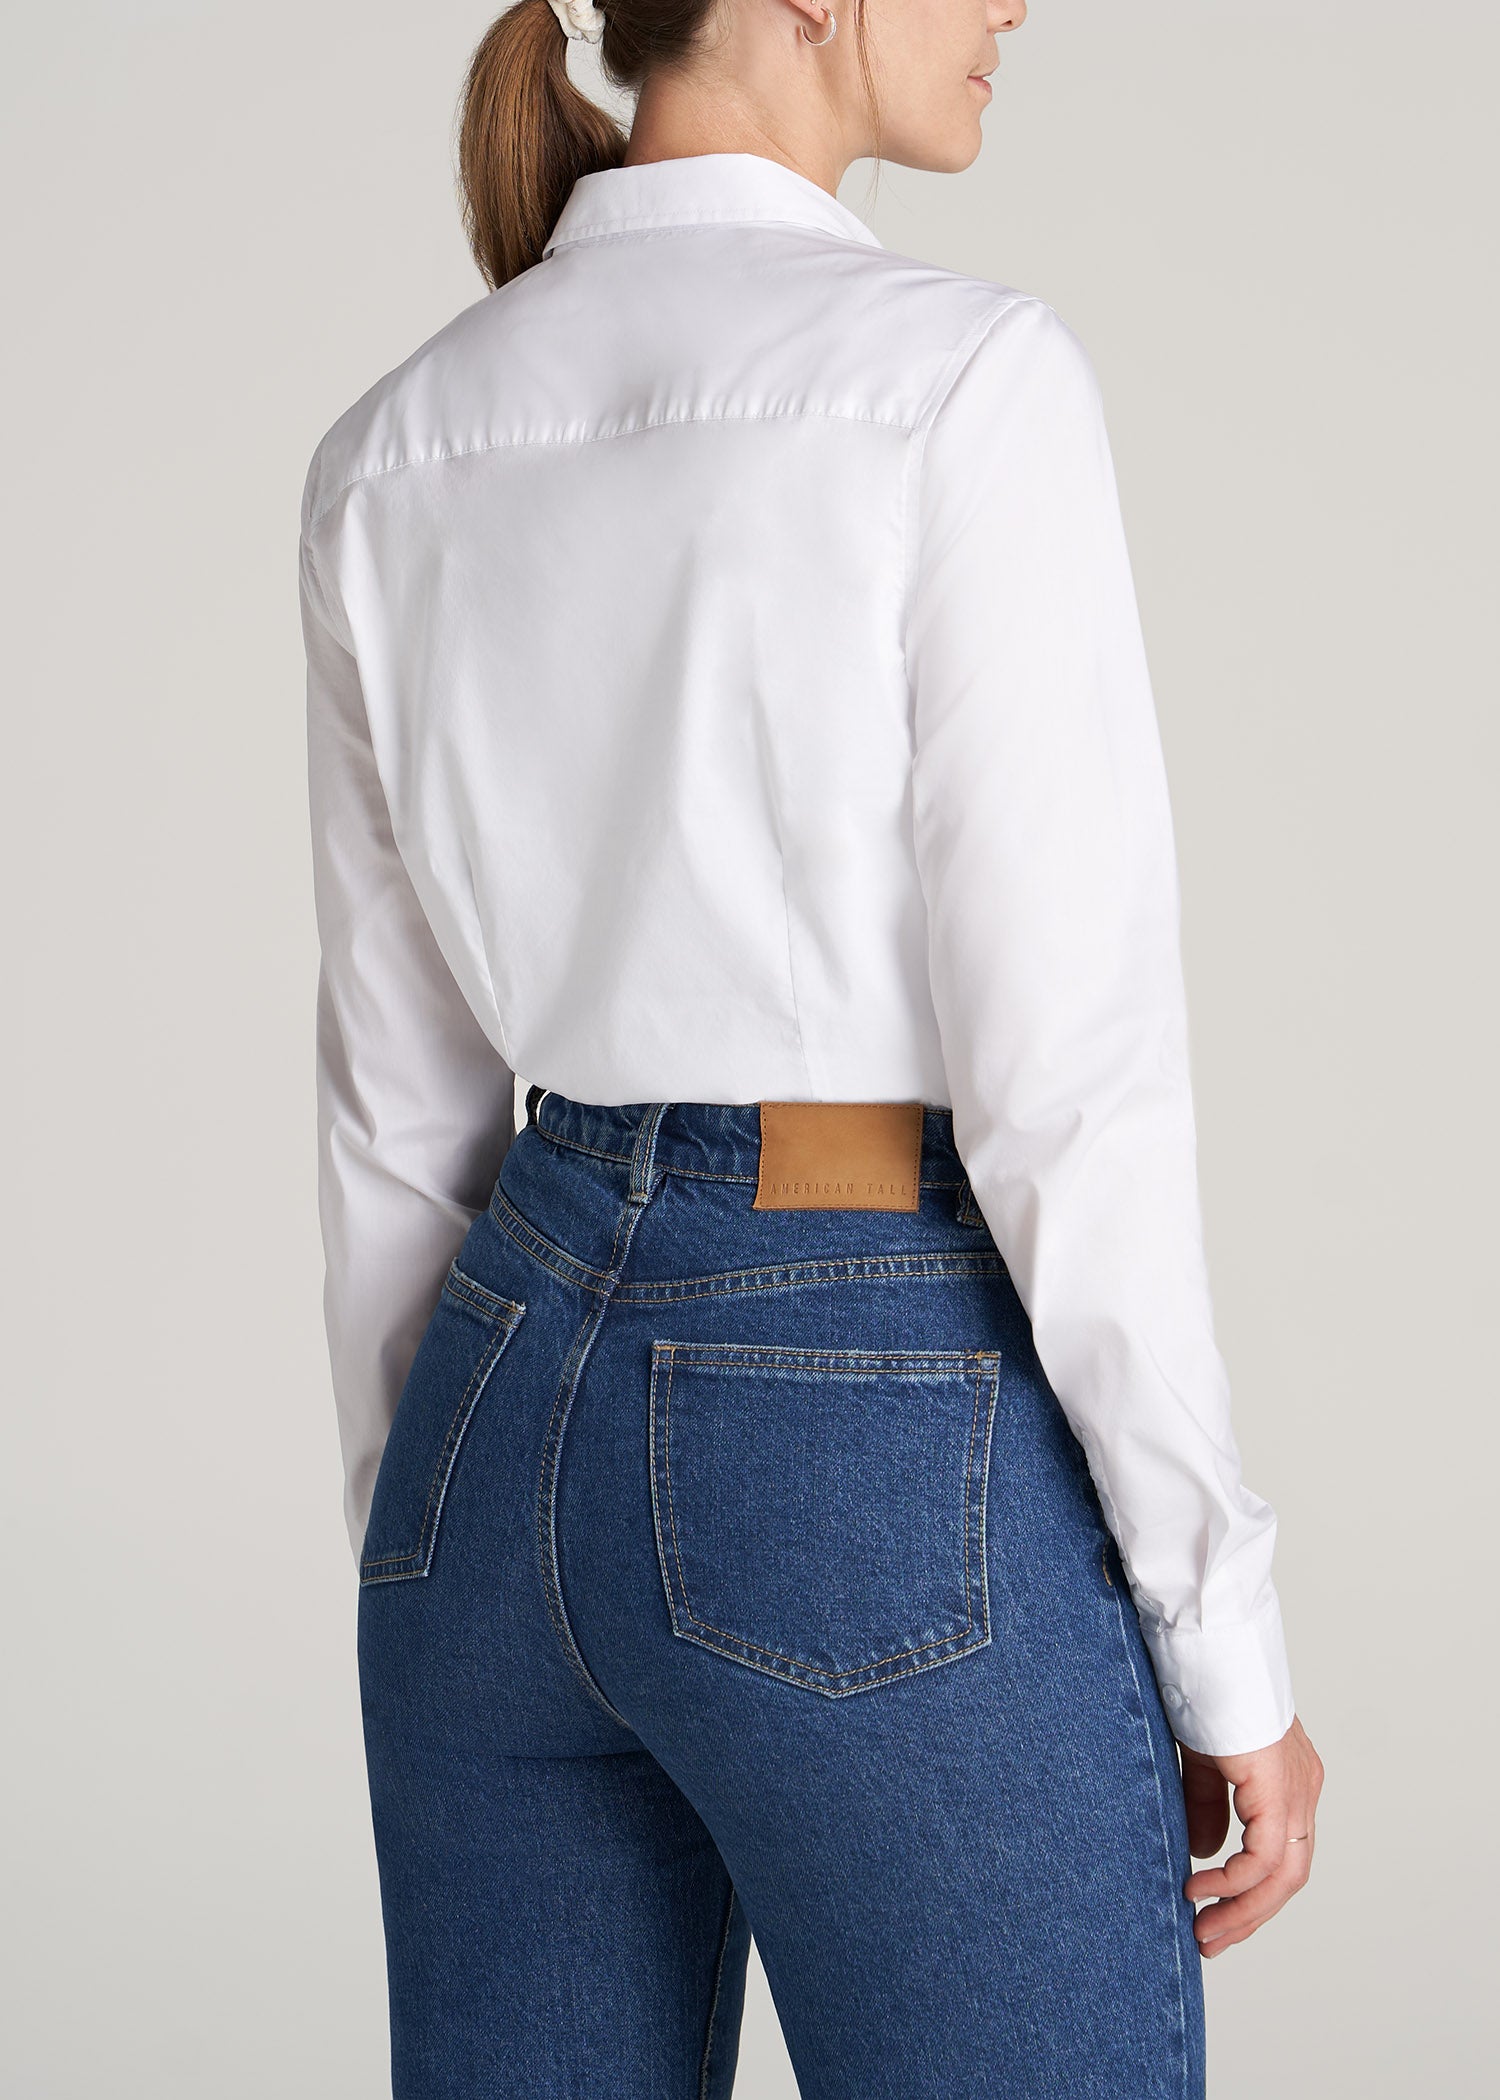        American-Tall-Women-Button-Up-Dress-Shirt-White-back